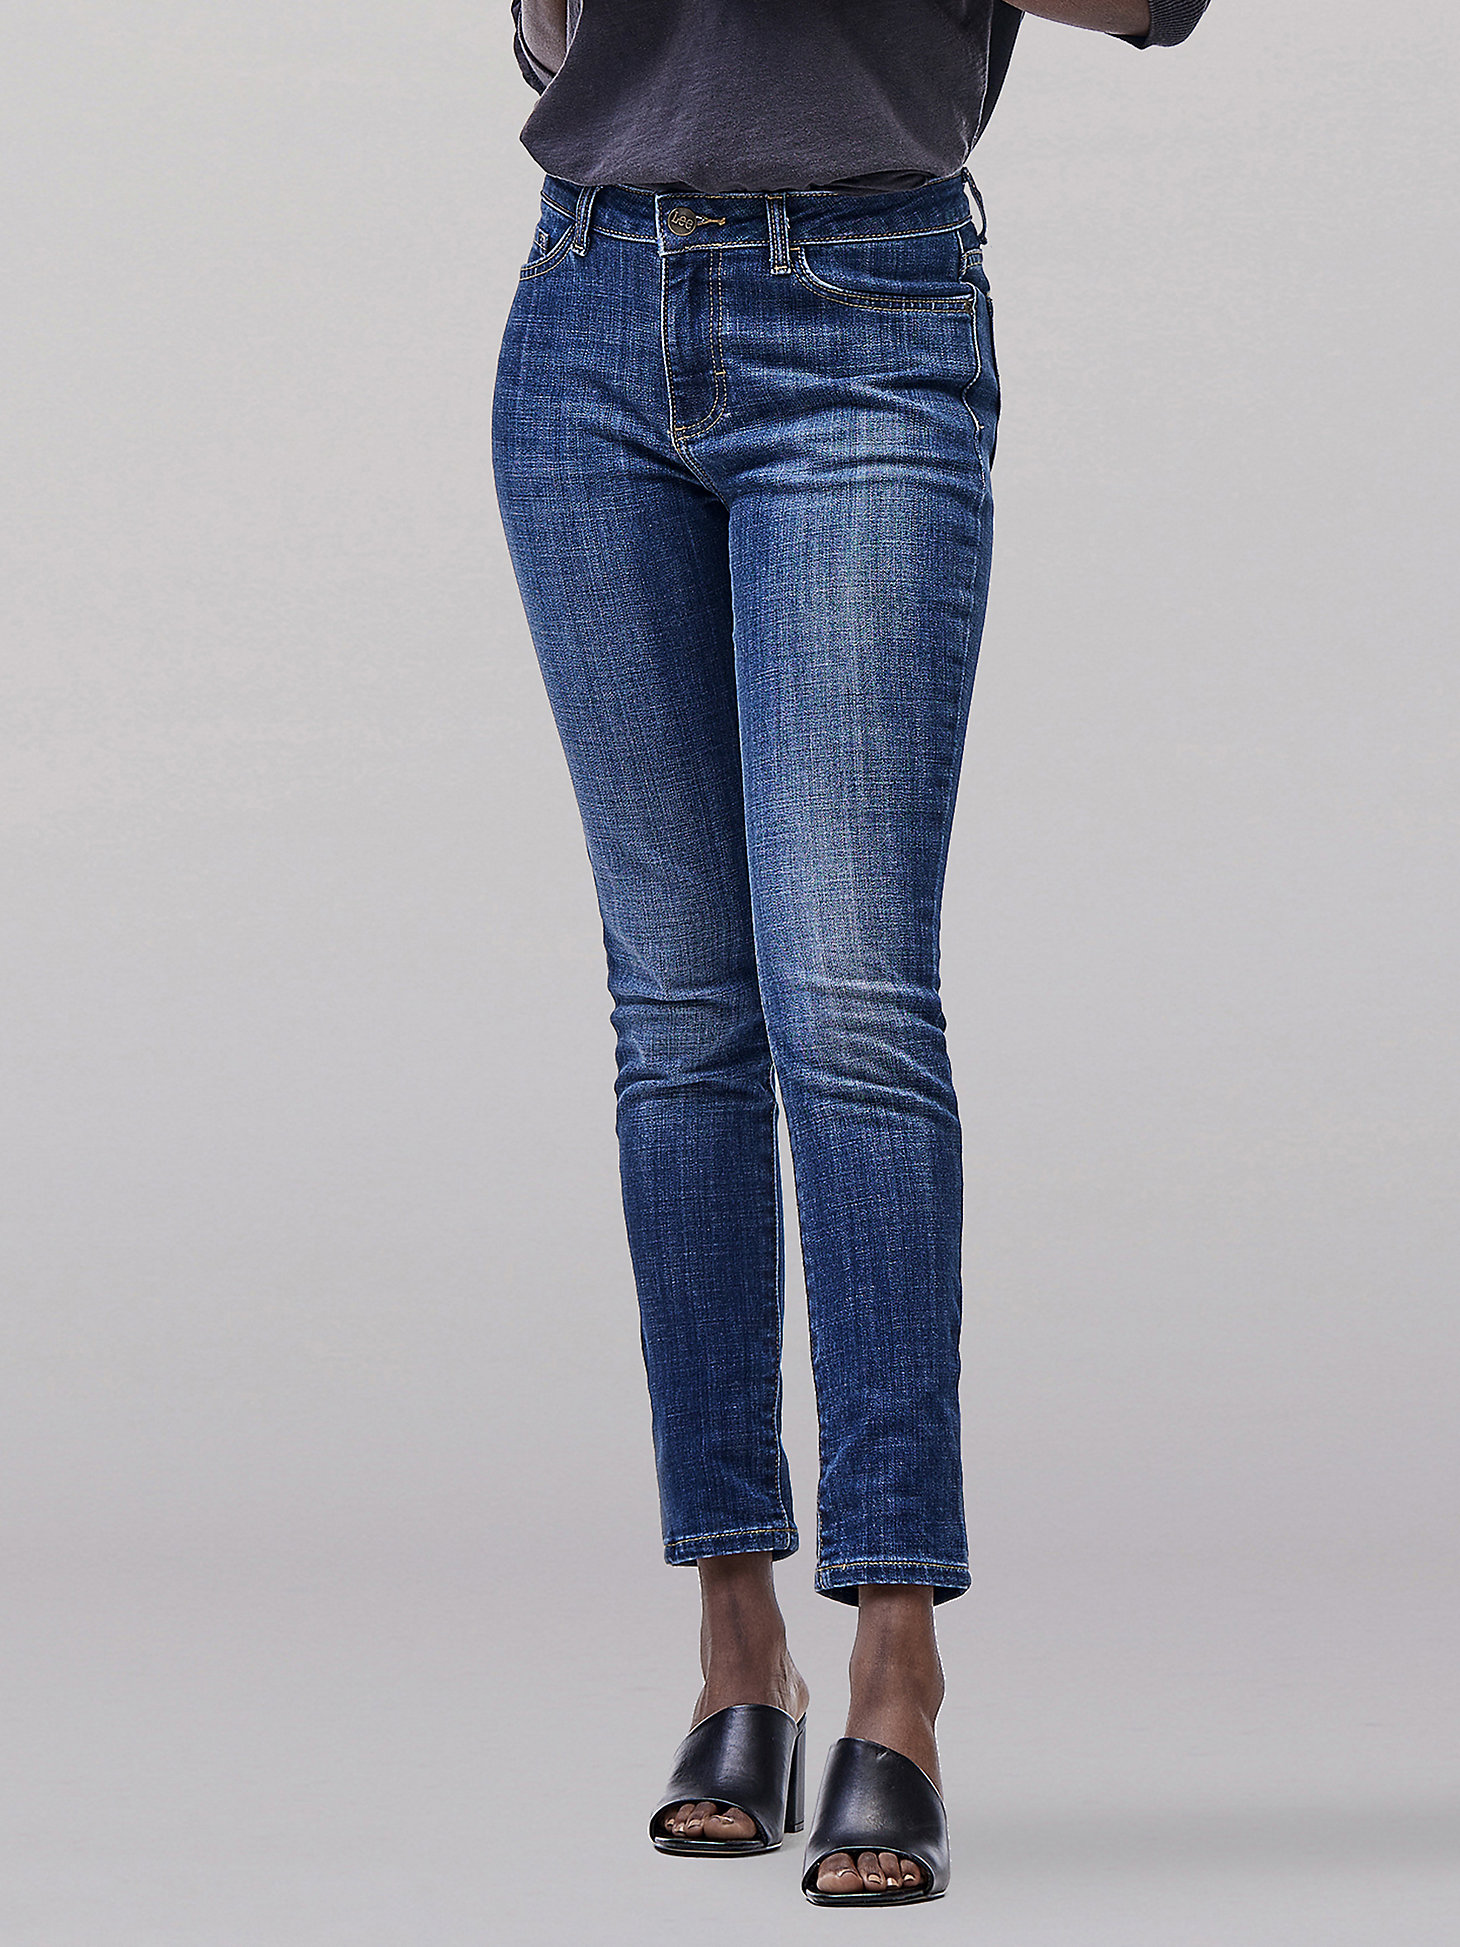 Women's Legendary Slim Fit Skinny Jean in Lagoon Blue main view